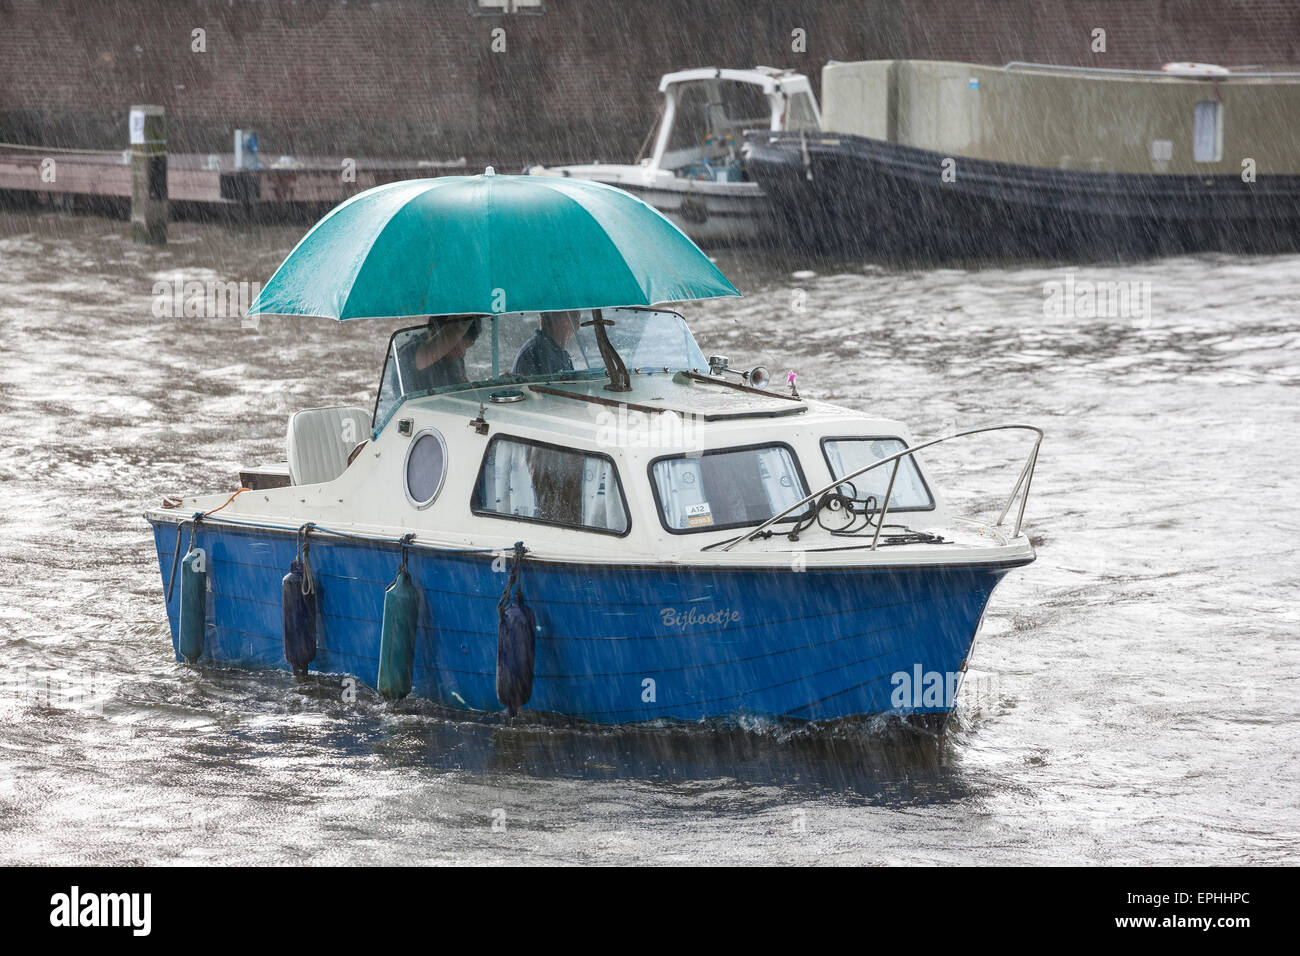 Amsterdam raining. Small boat, small cabin cruiser in sudden summer rain with large umbrella in Amsterdam canal Stock Photo